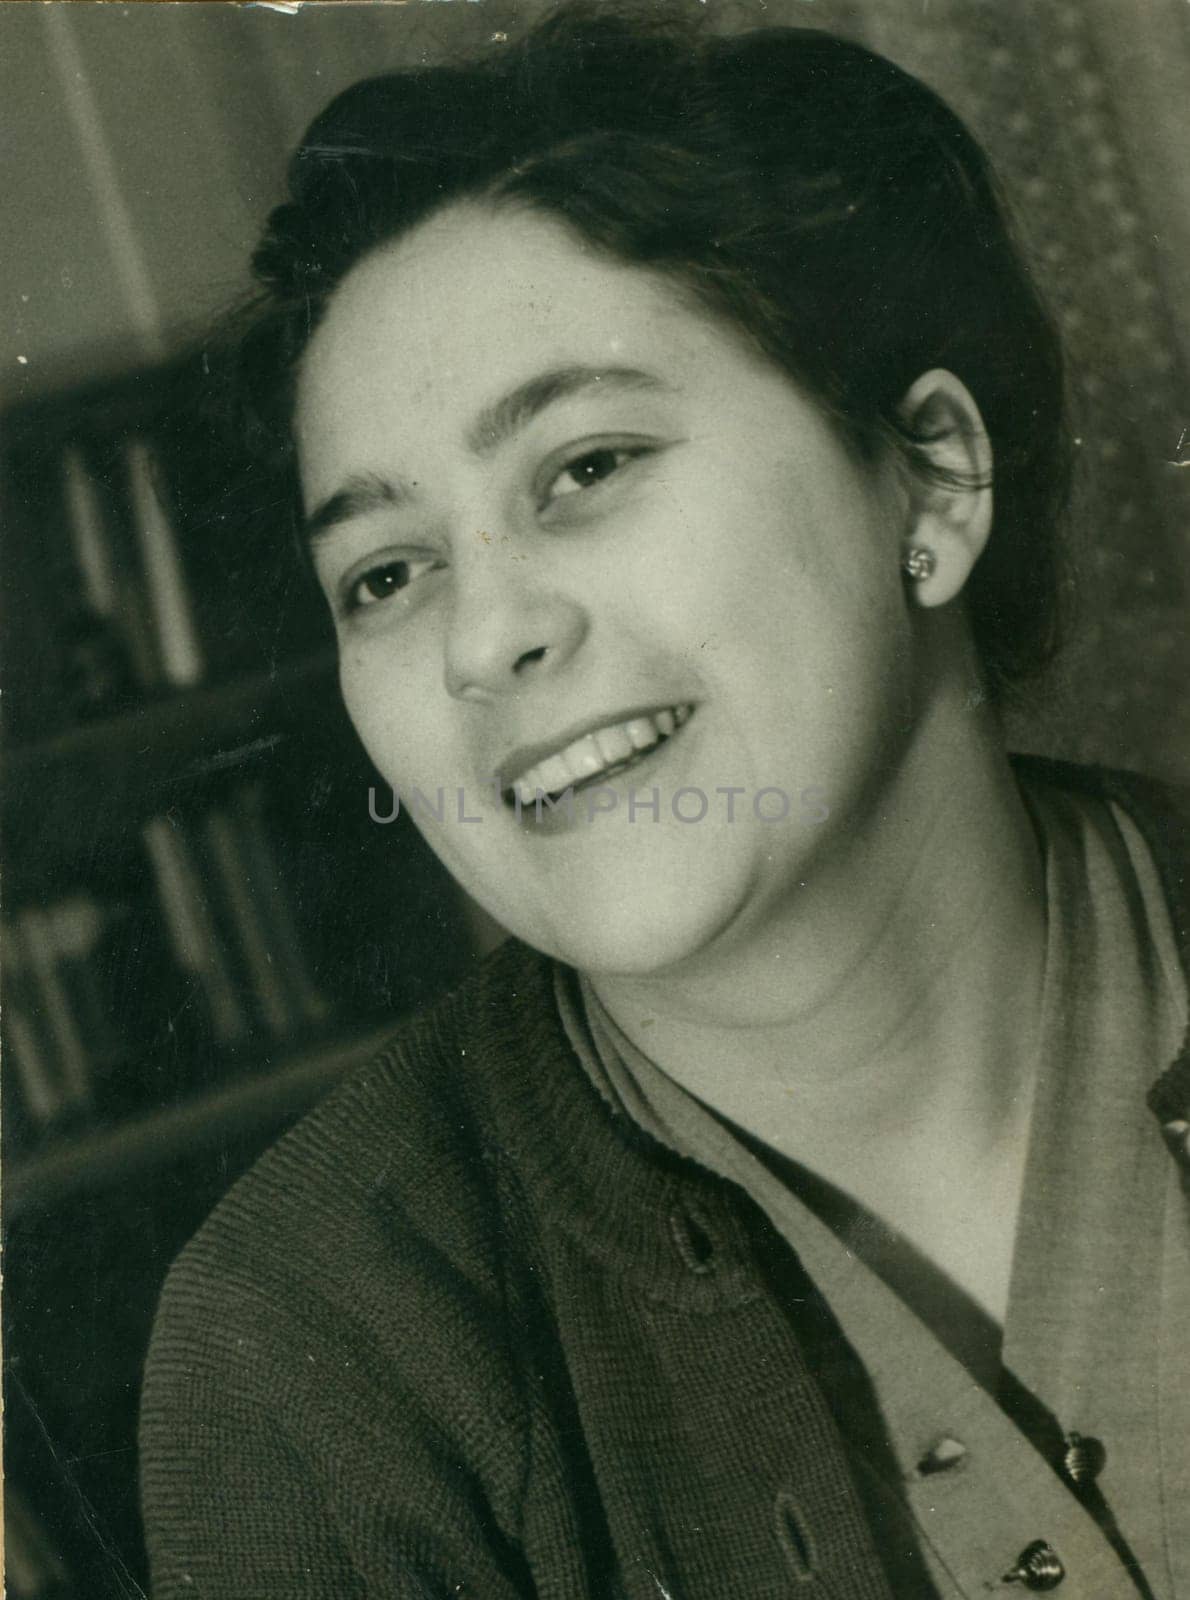 THE CZECHOSLOVAK SOCIALIST REPUBLIC - CIRCA 1960s: Retro photo shows studio portrait of mature woman. Vintage black and white photography.